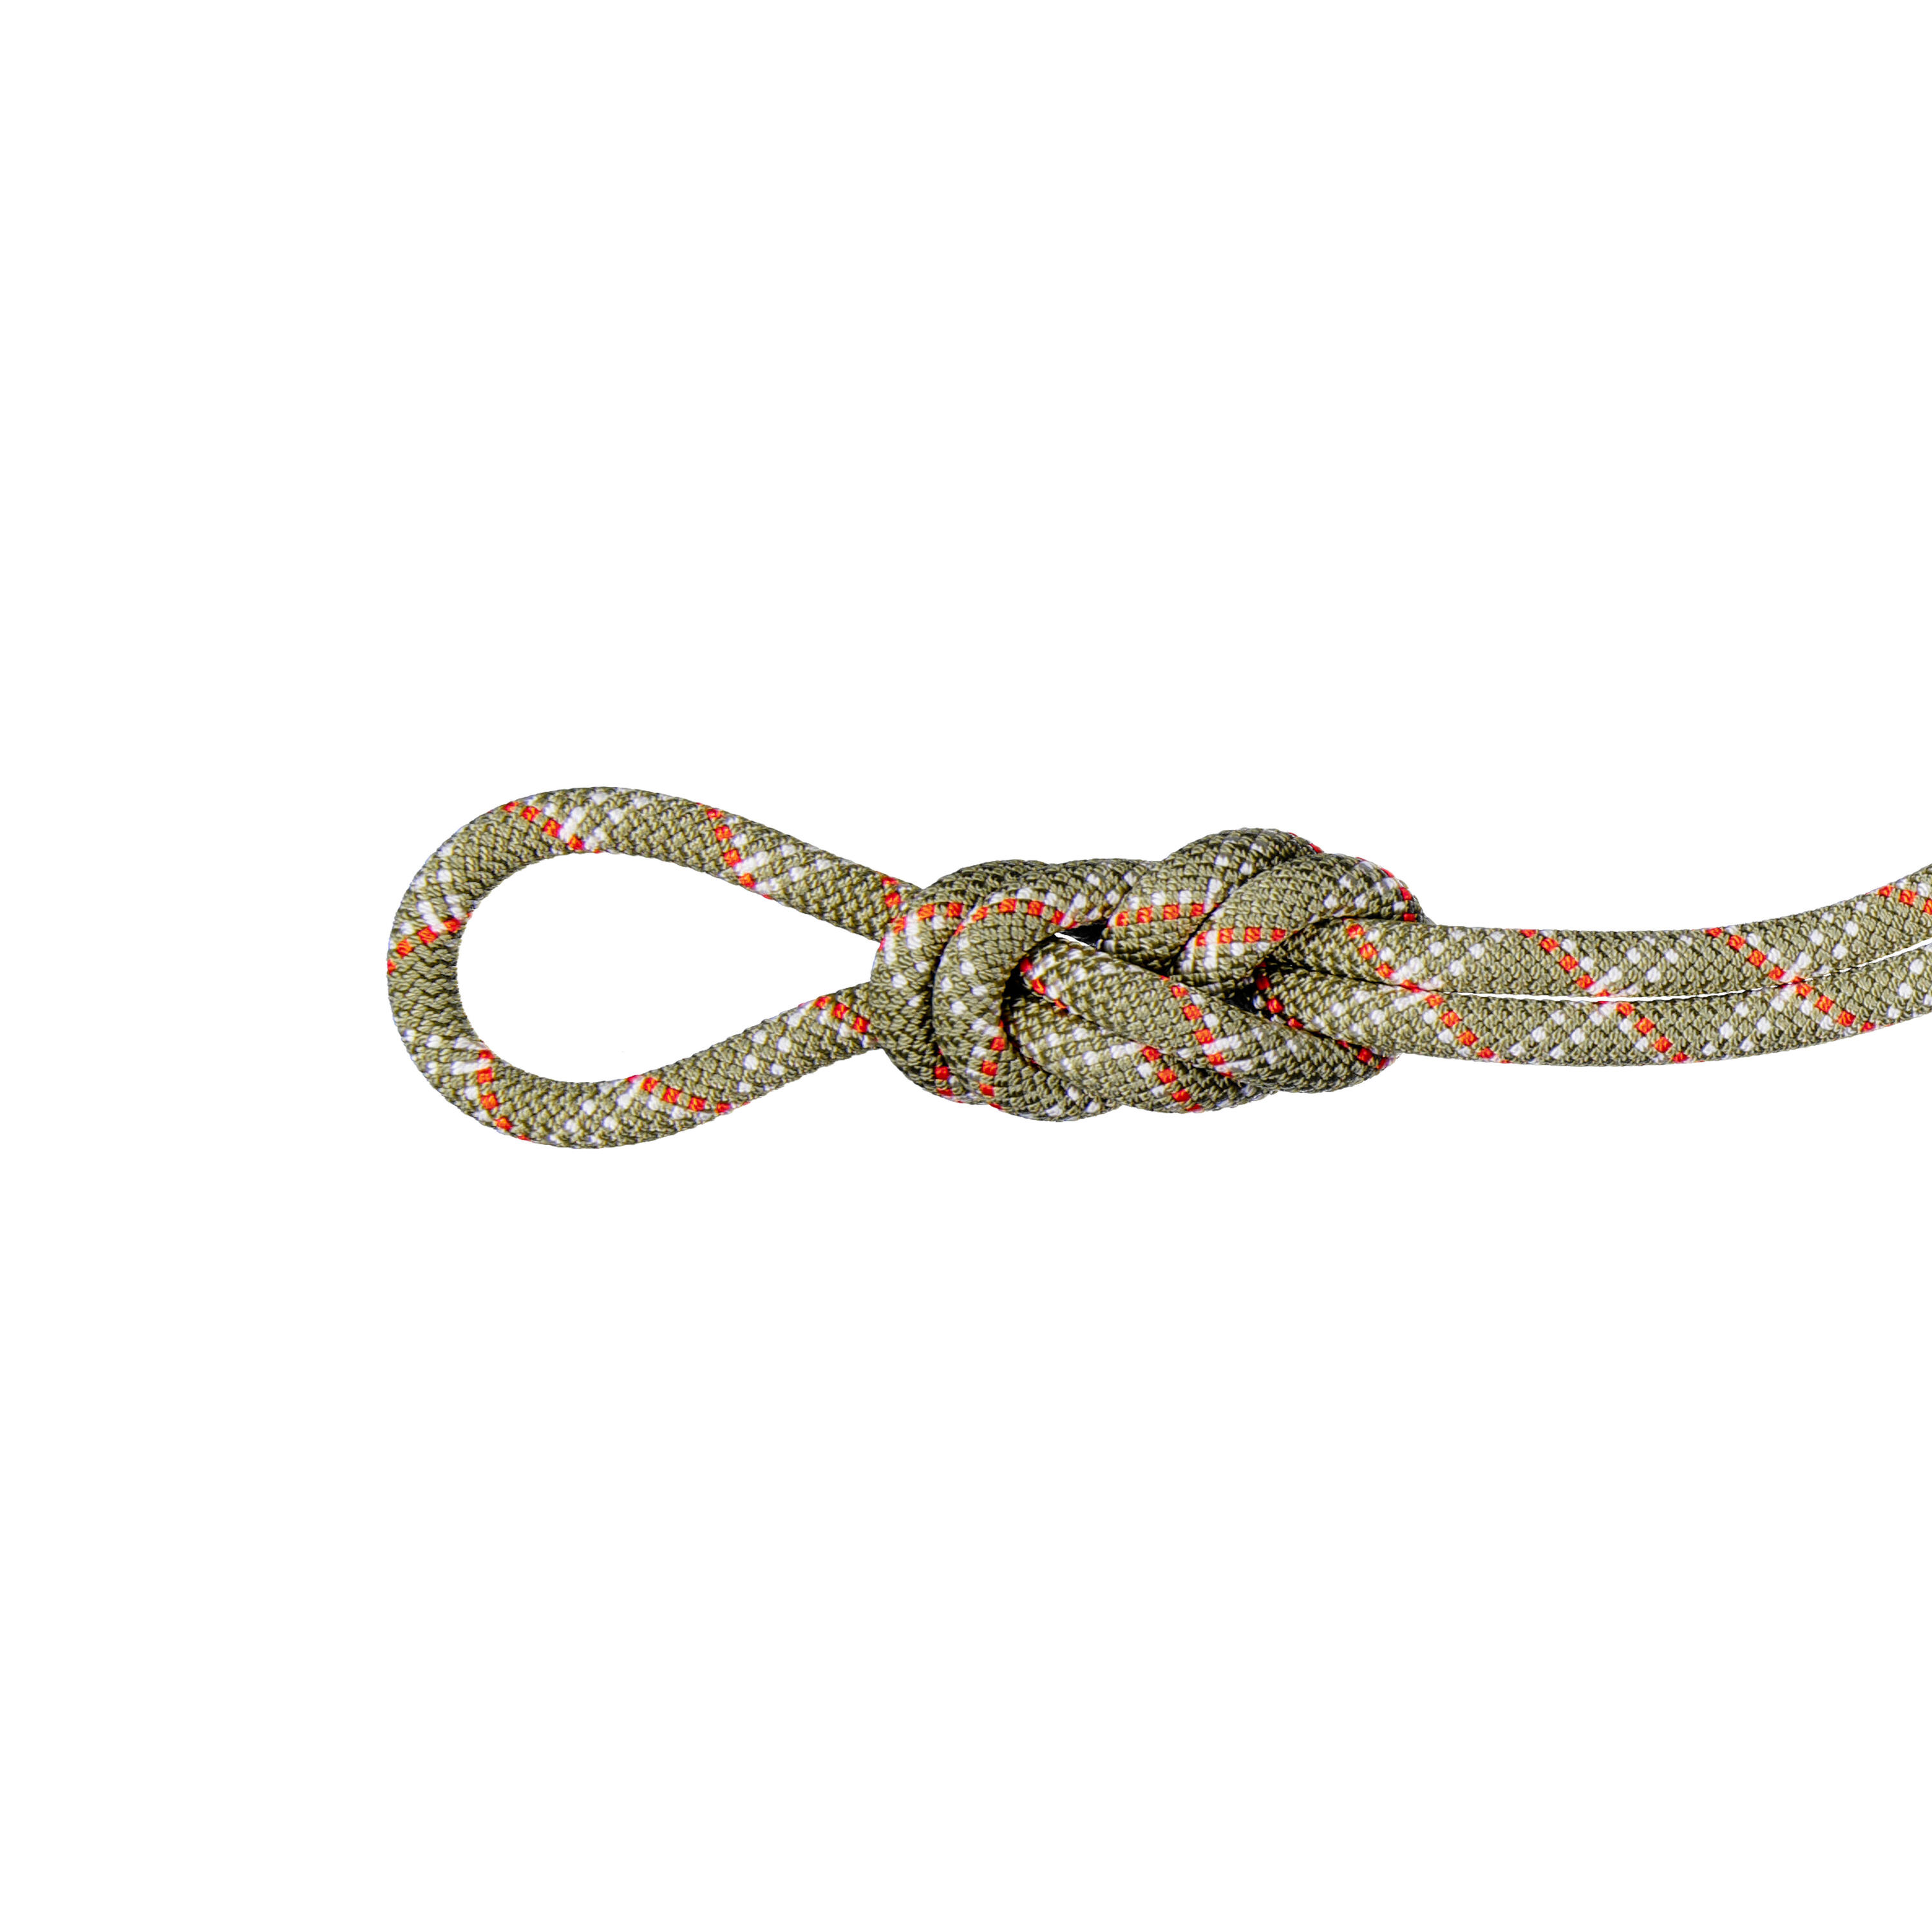 MAMMUT Gym Classic Single Rope 9.5 mm x 40m - Olive